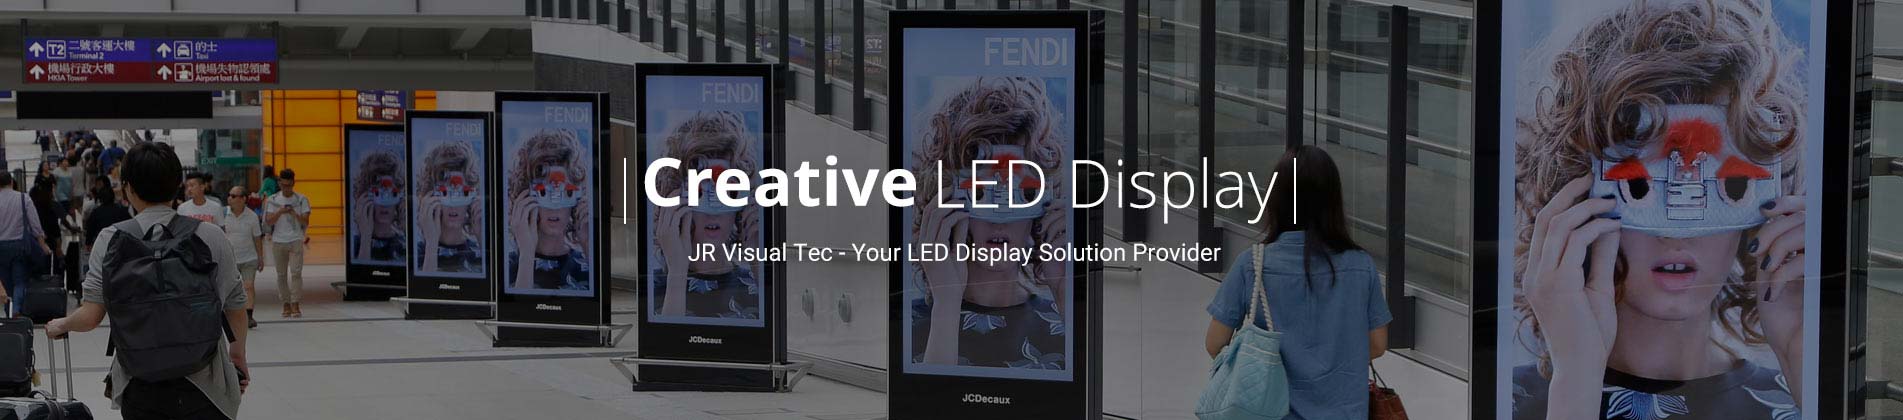 creative led display